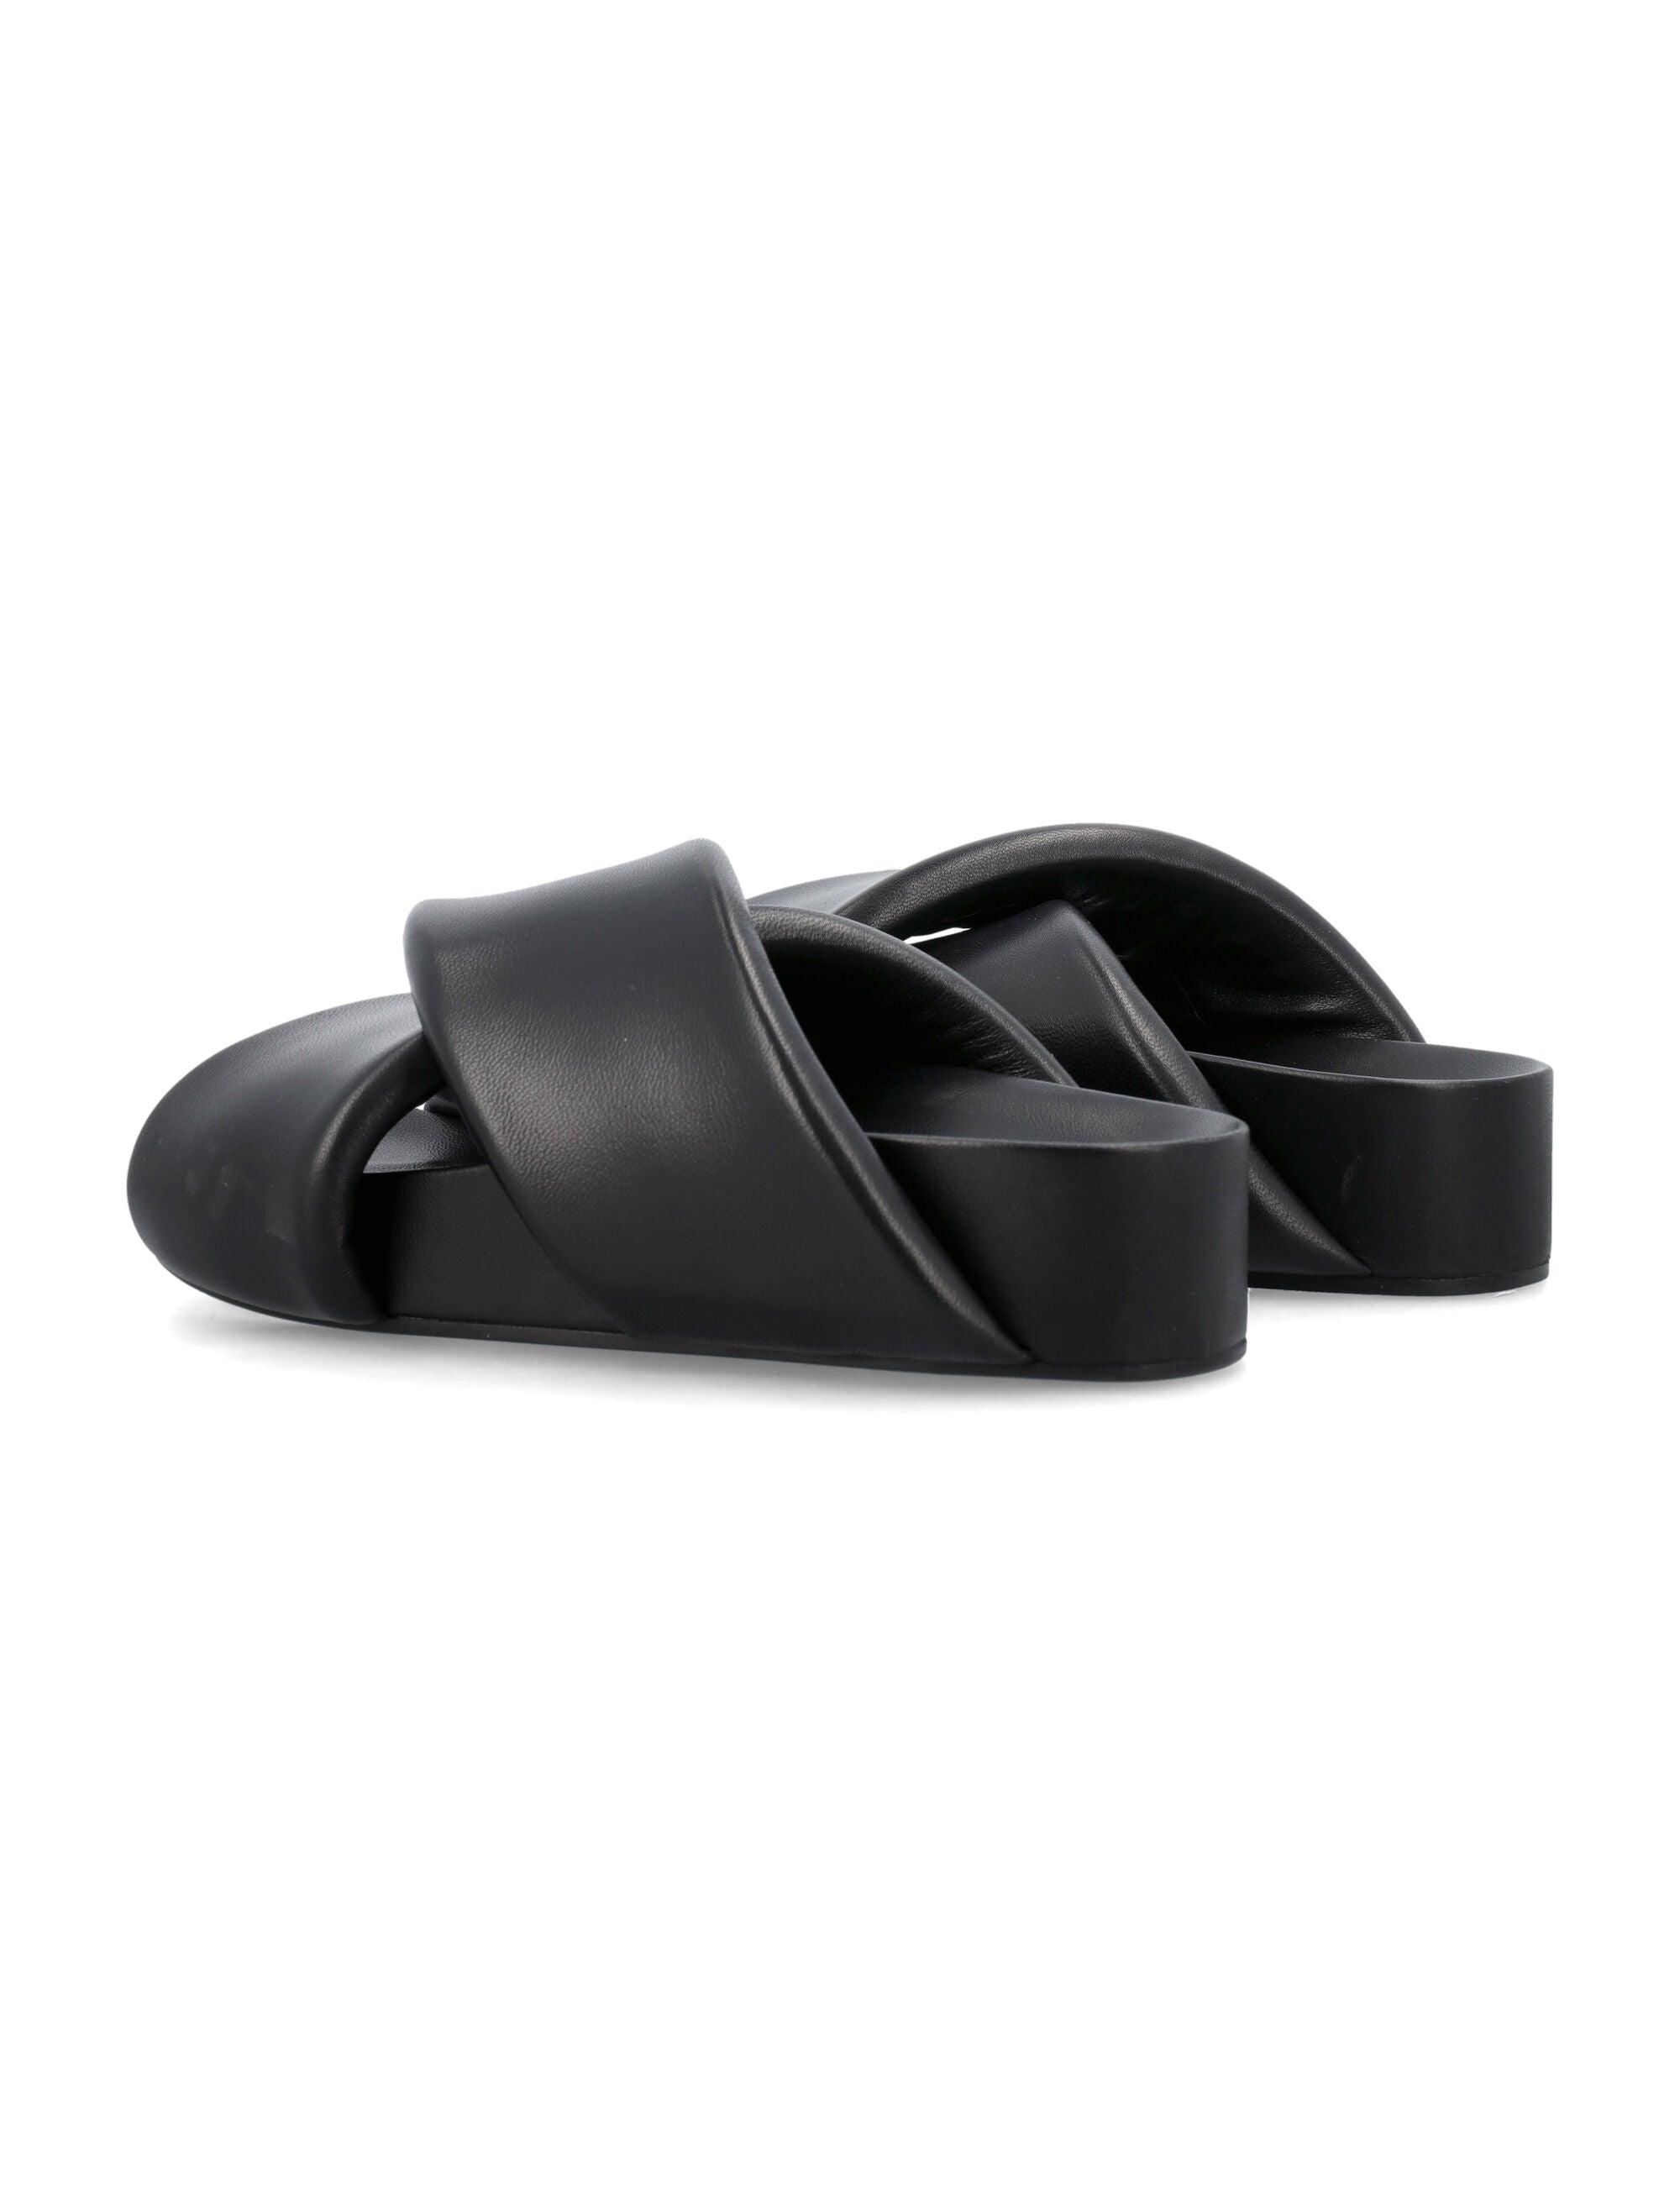 Jil Sander Padded Slides in Black | Lyst